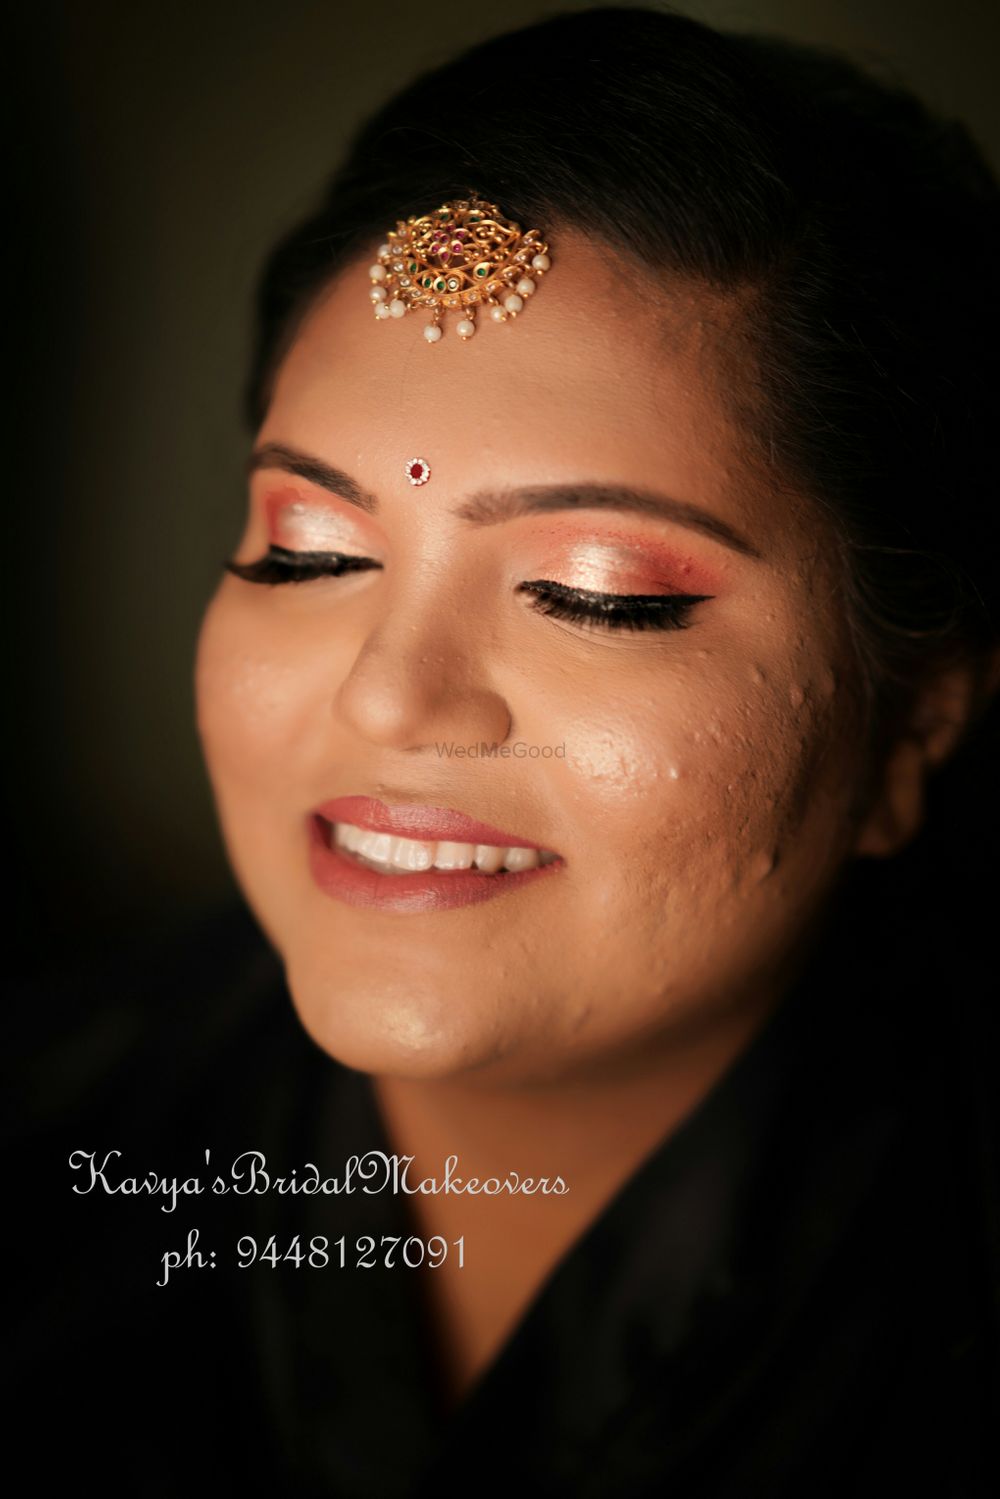 Photo From Dr. Monisha singh - By Kavya Bridal Makeovers